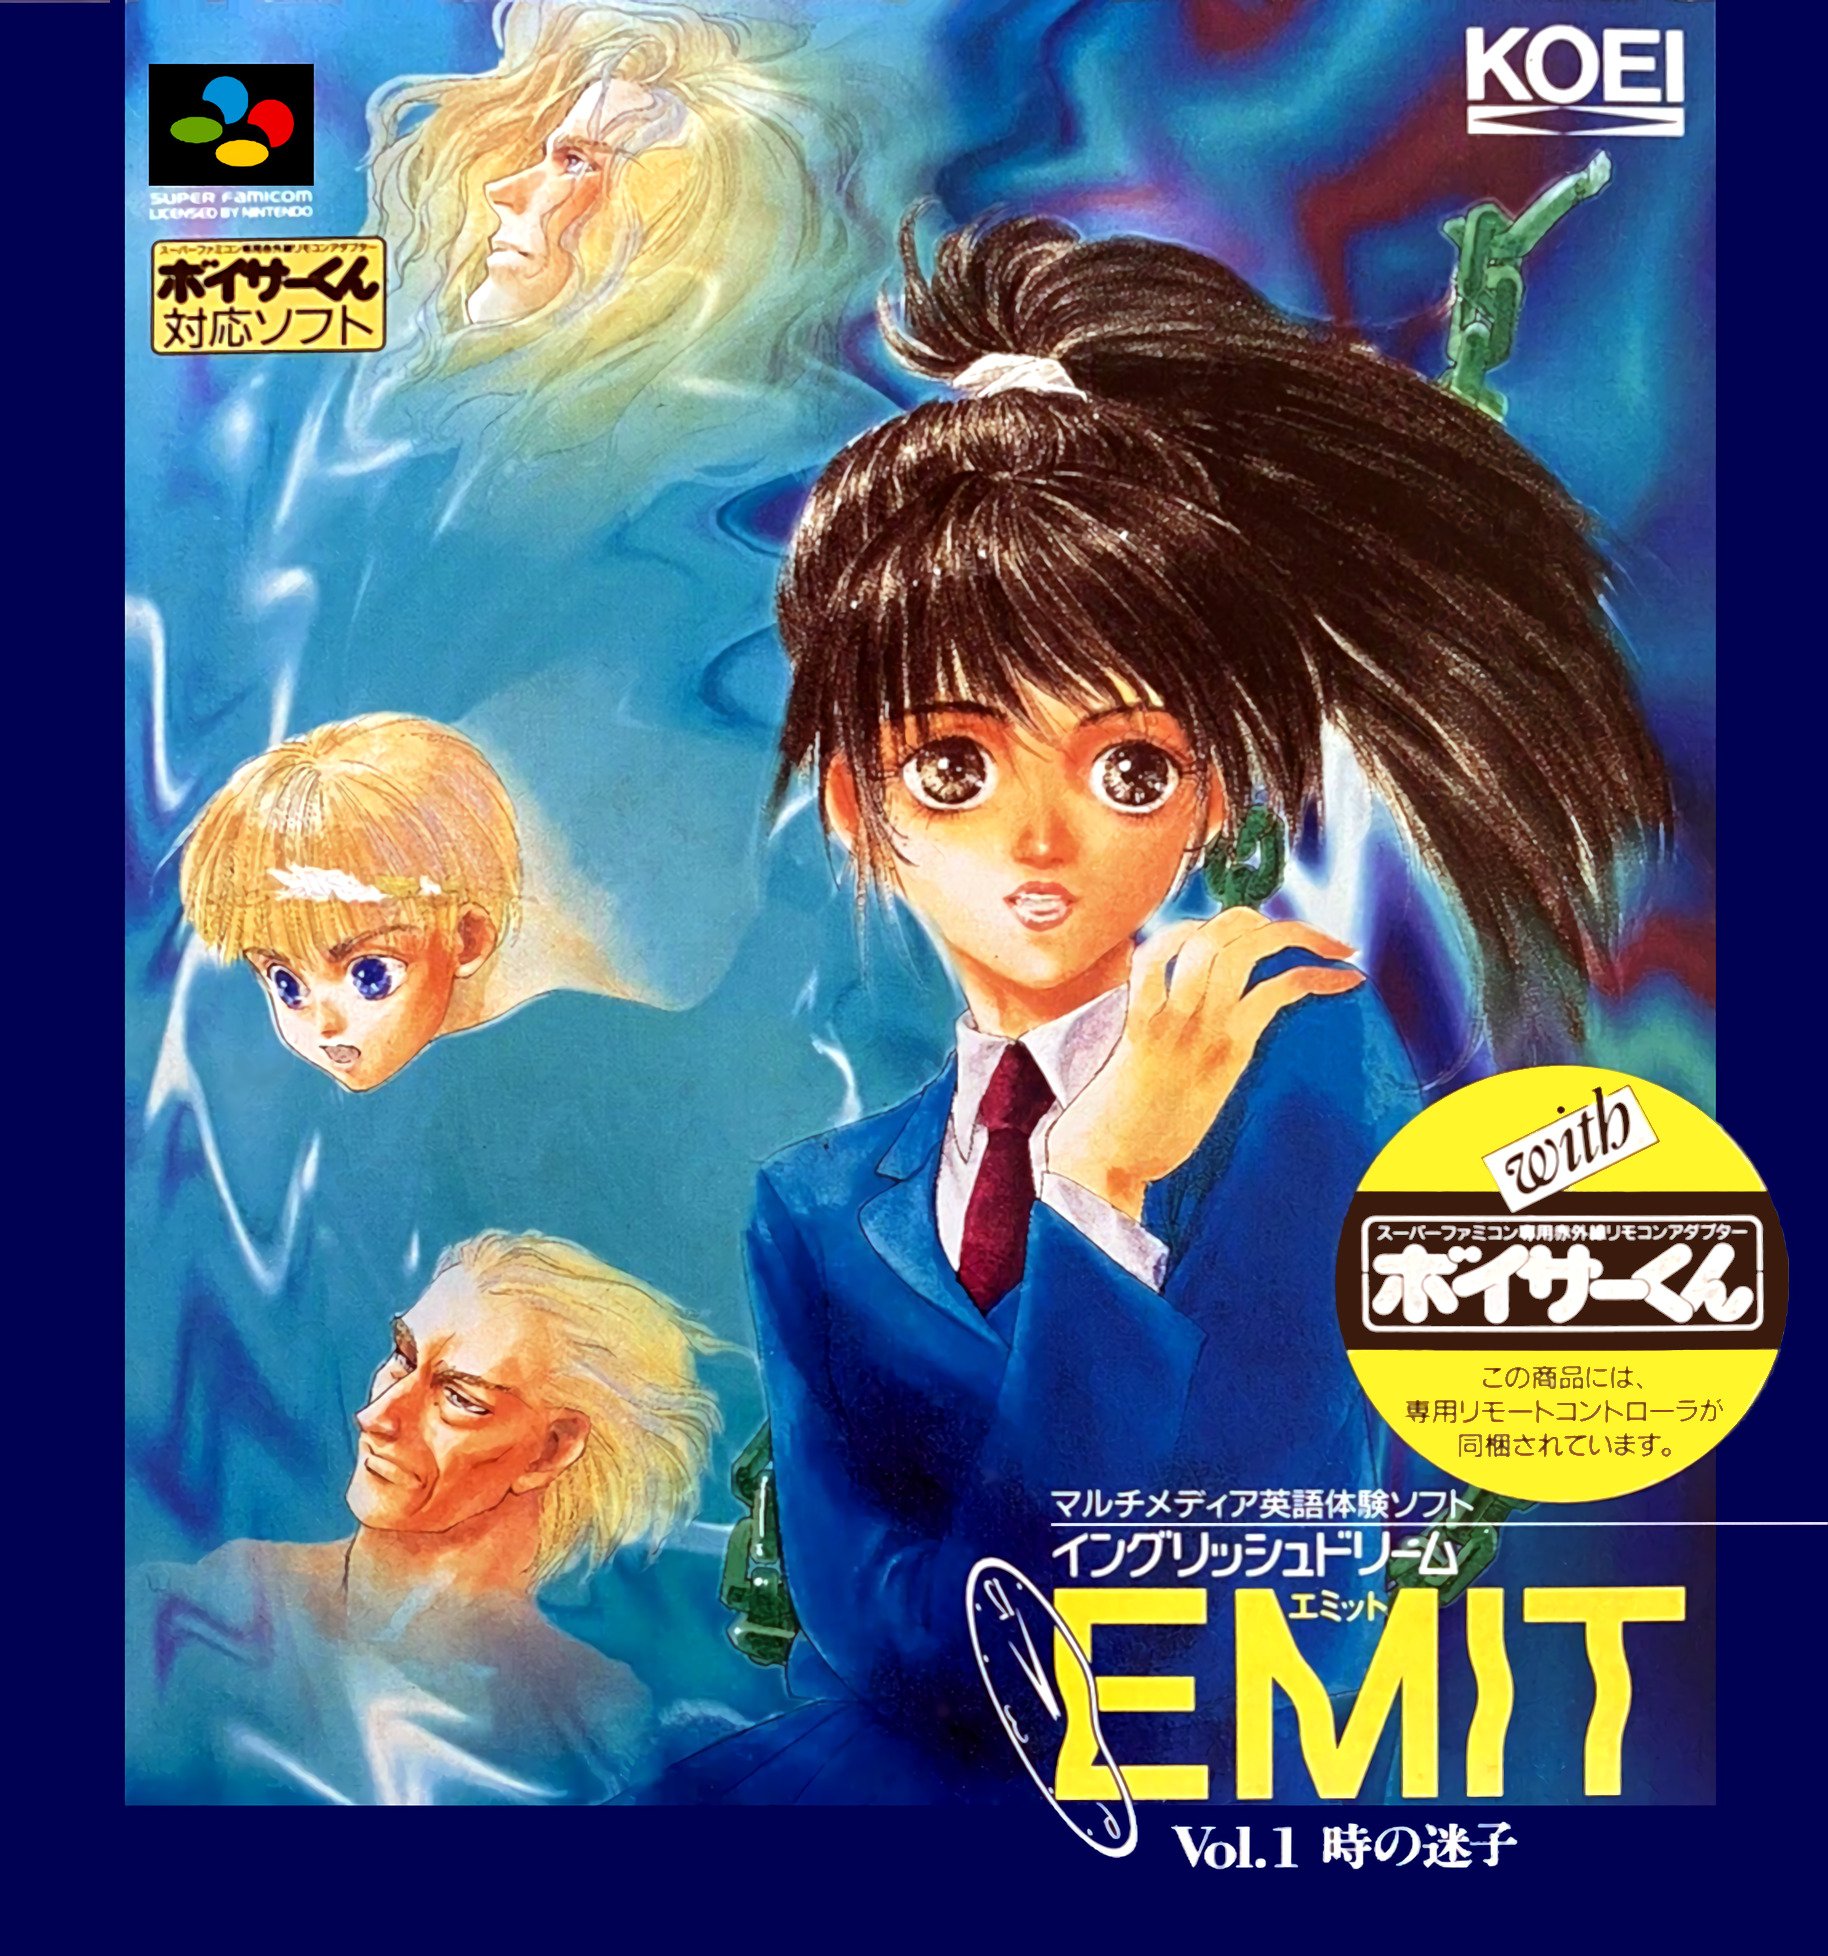 EMIT Vol. 1: Toki No Maigo